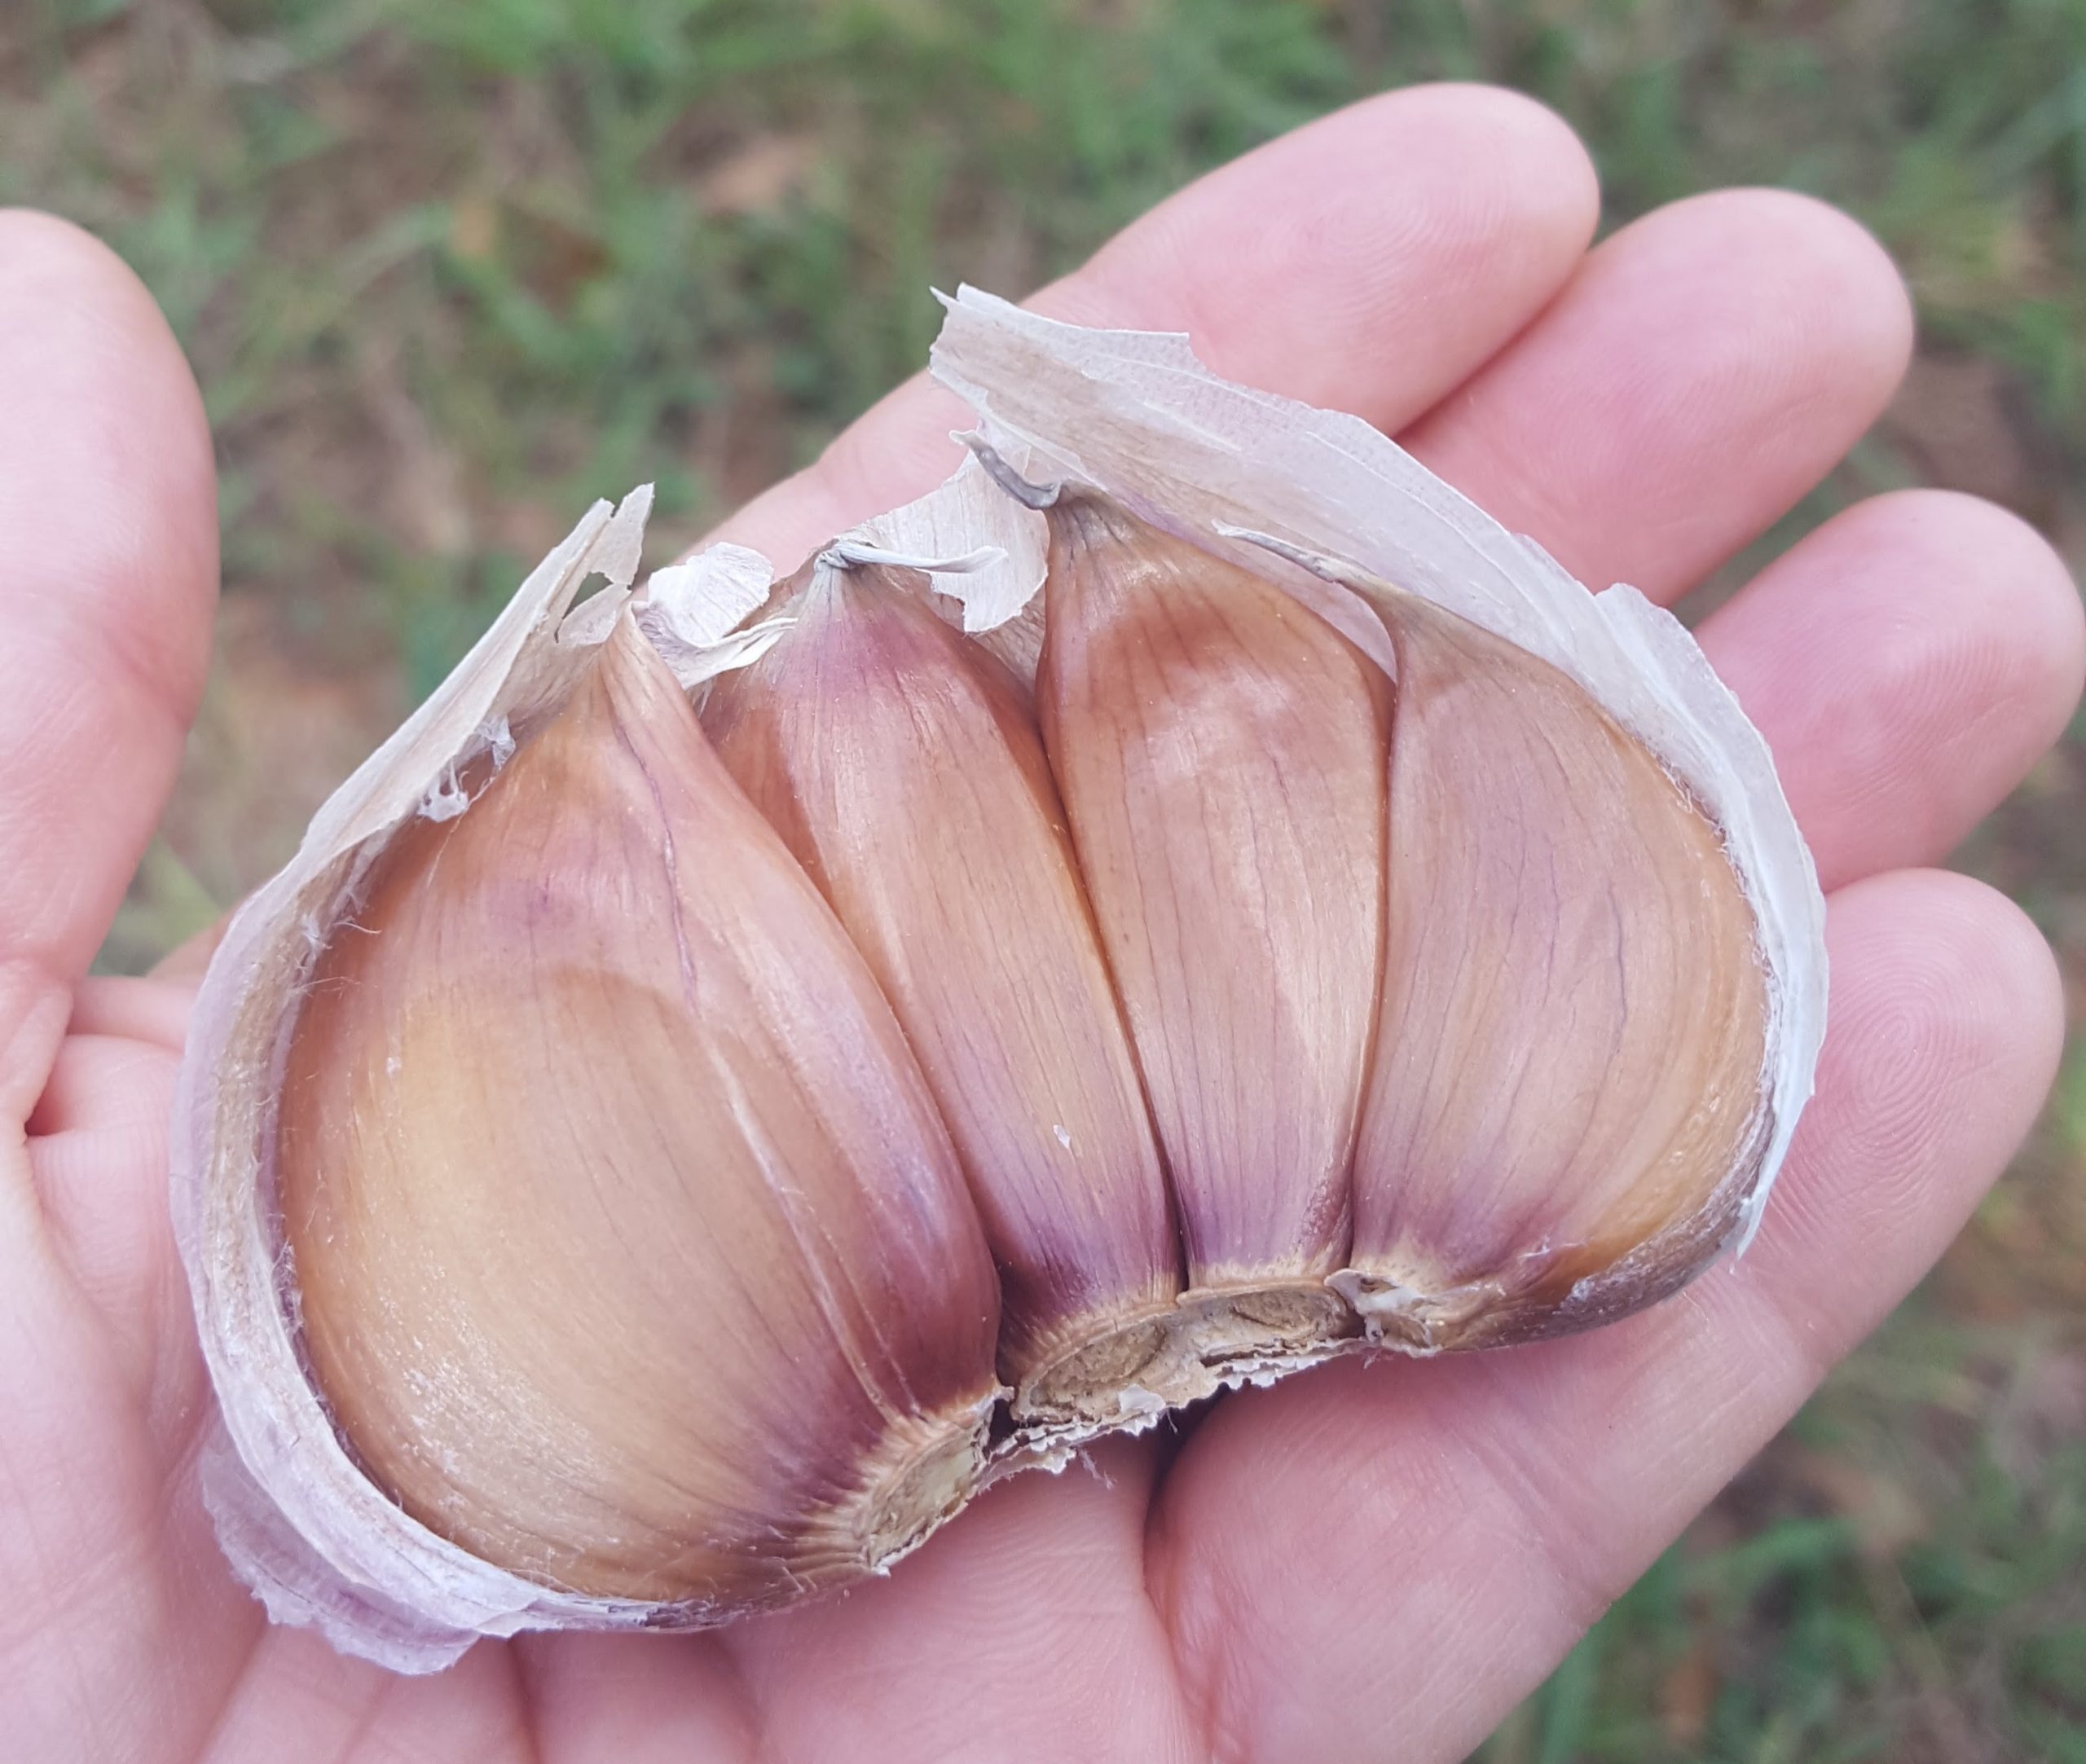 Growing Garlic – A Great Way To Get Started Gardening